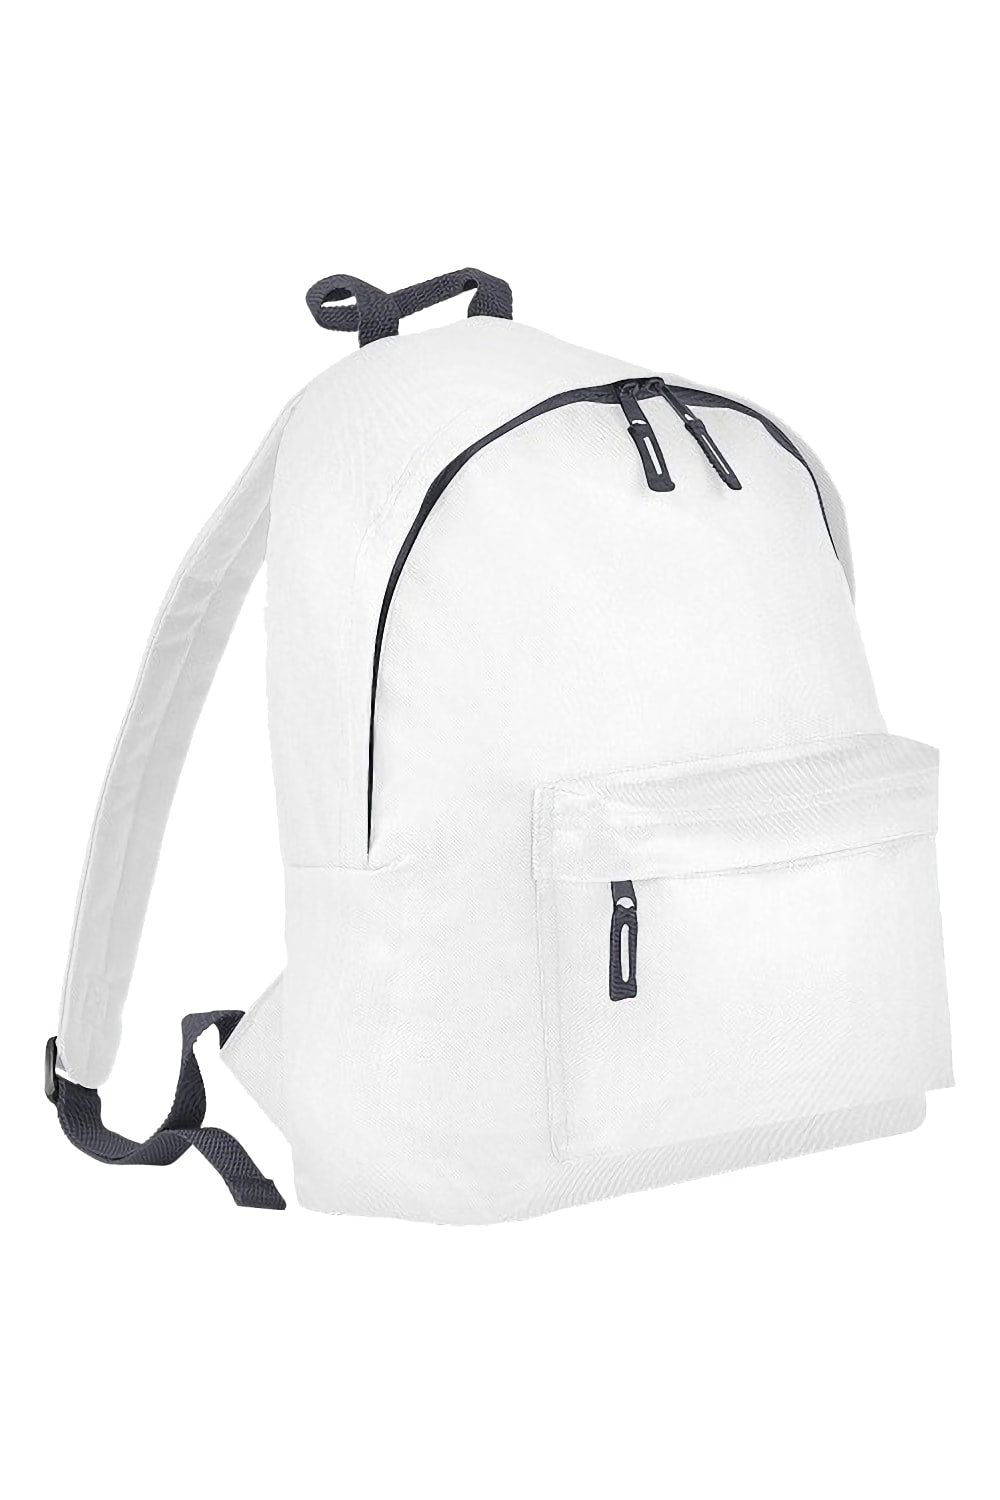 Junior Fashion Backpack / Rucksack (14 Liters) (White/Graphite)